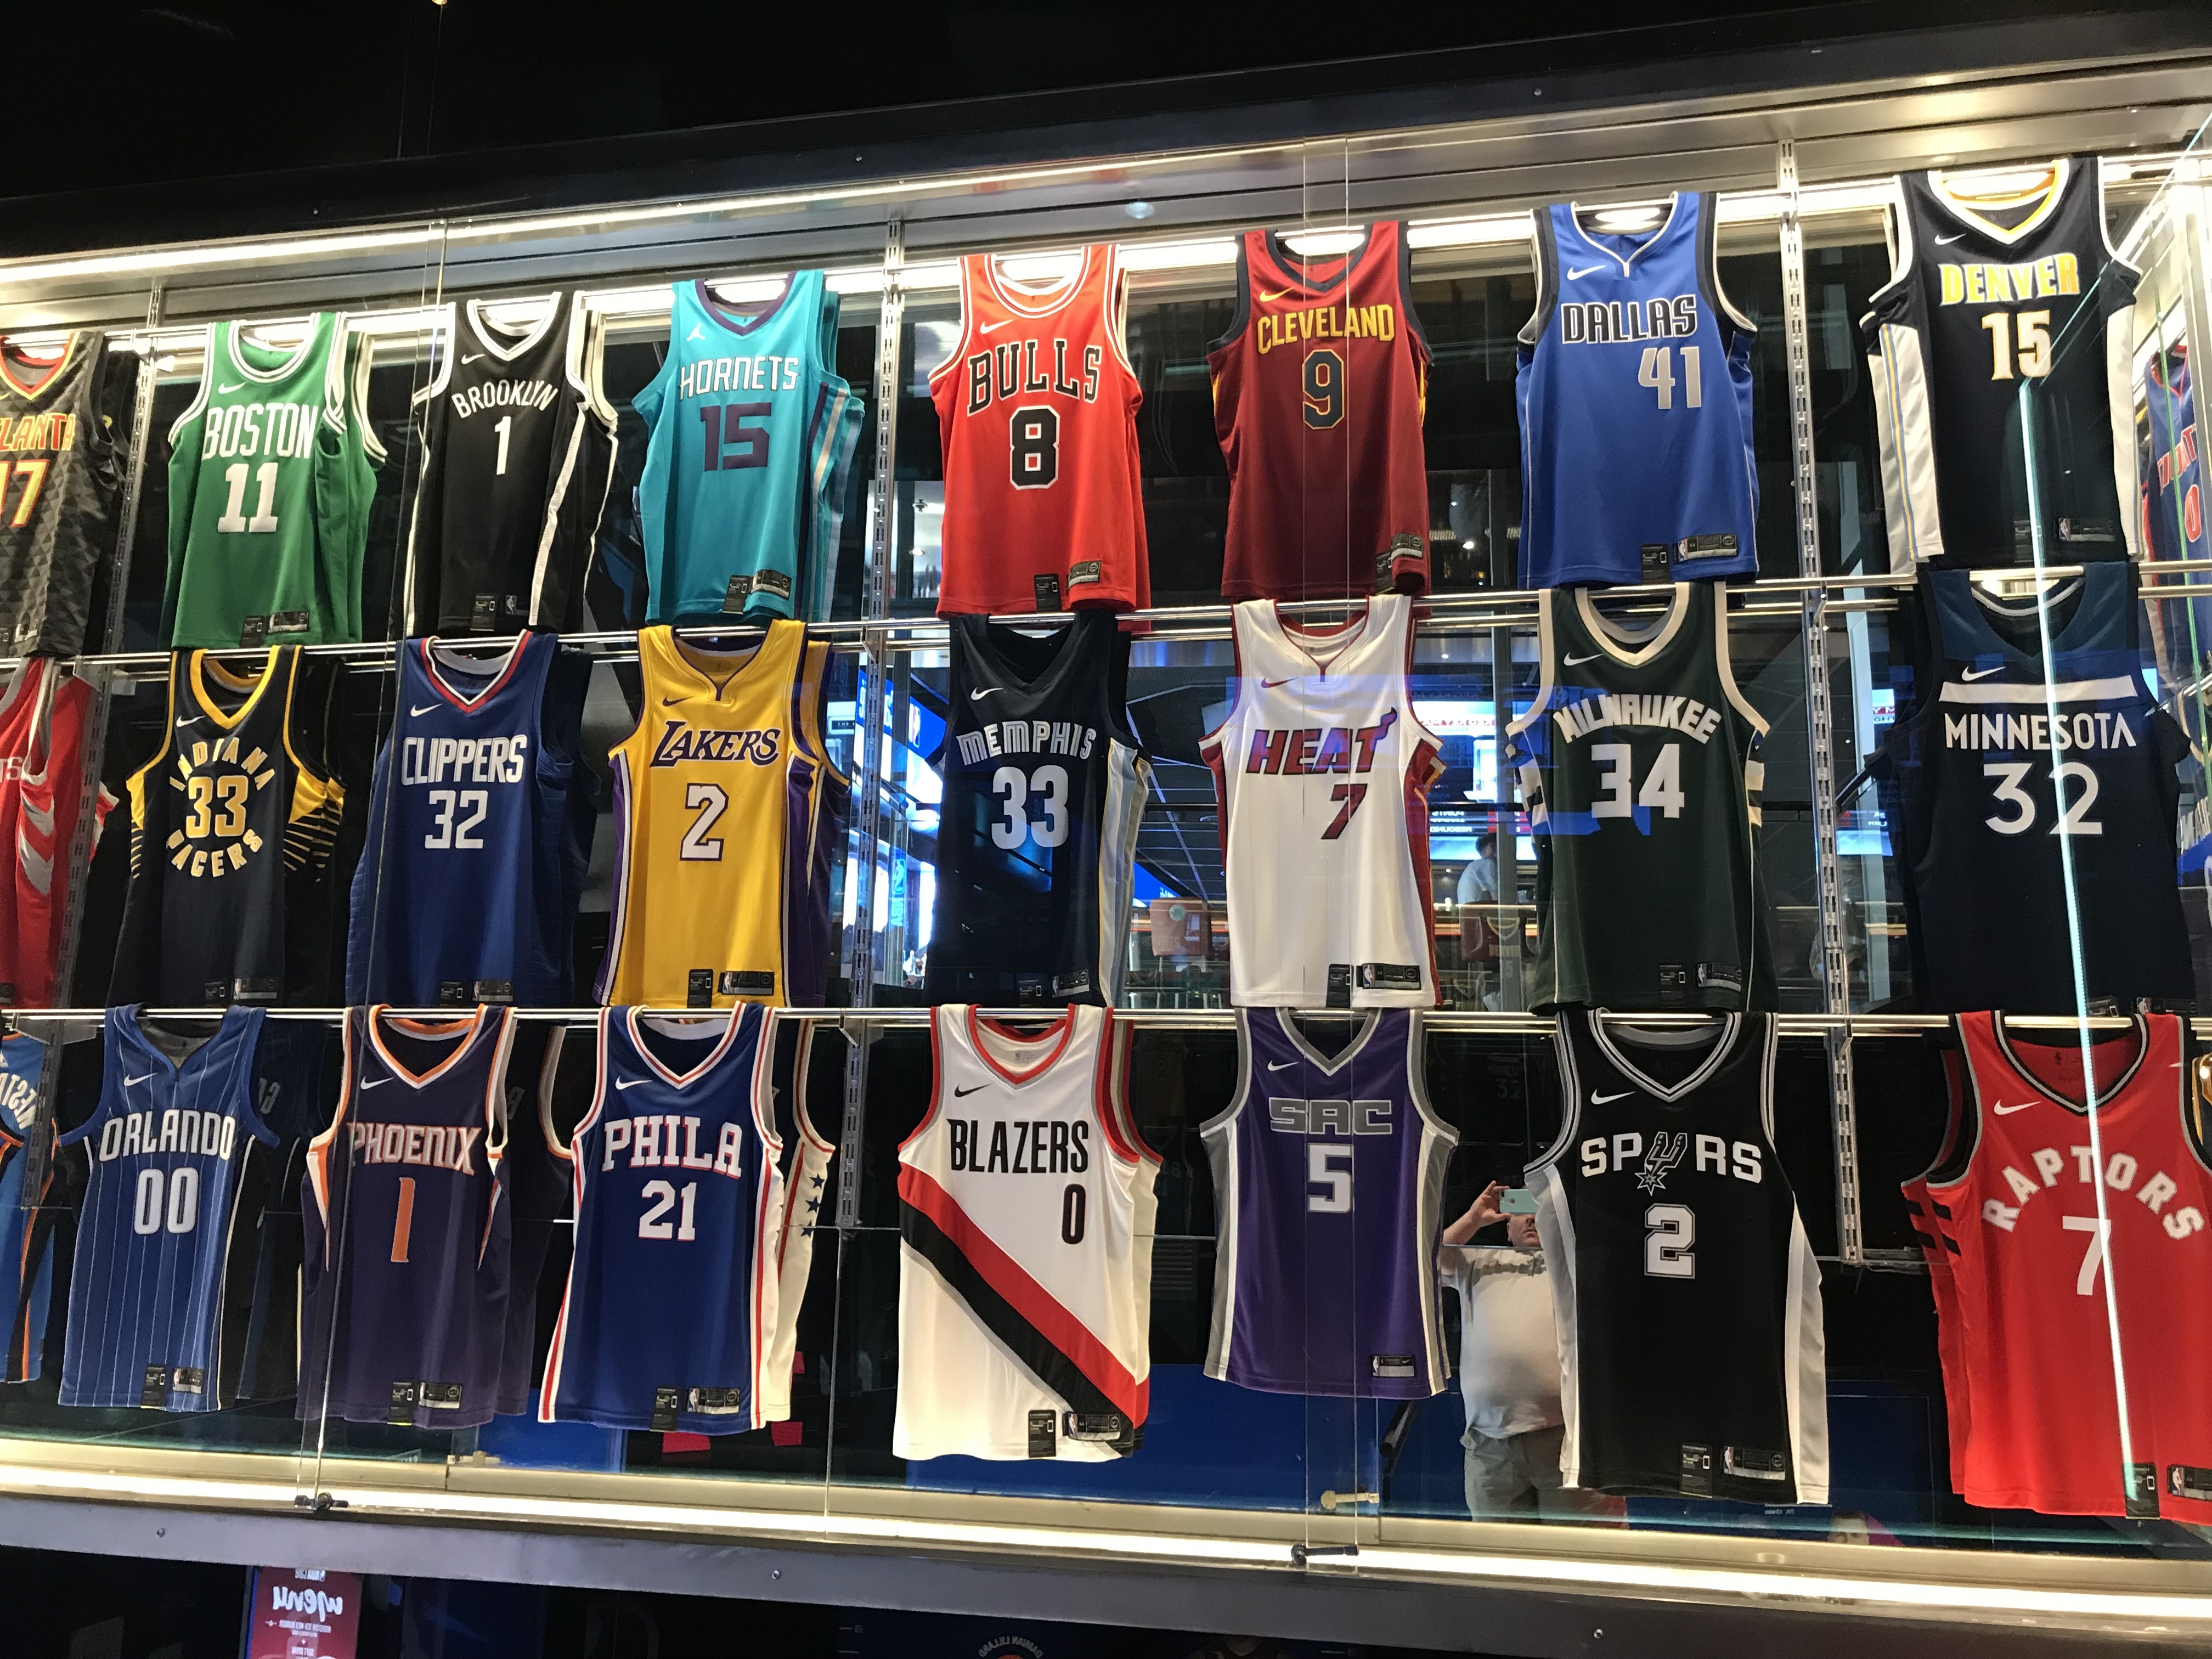 The NBA Cafe